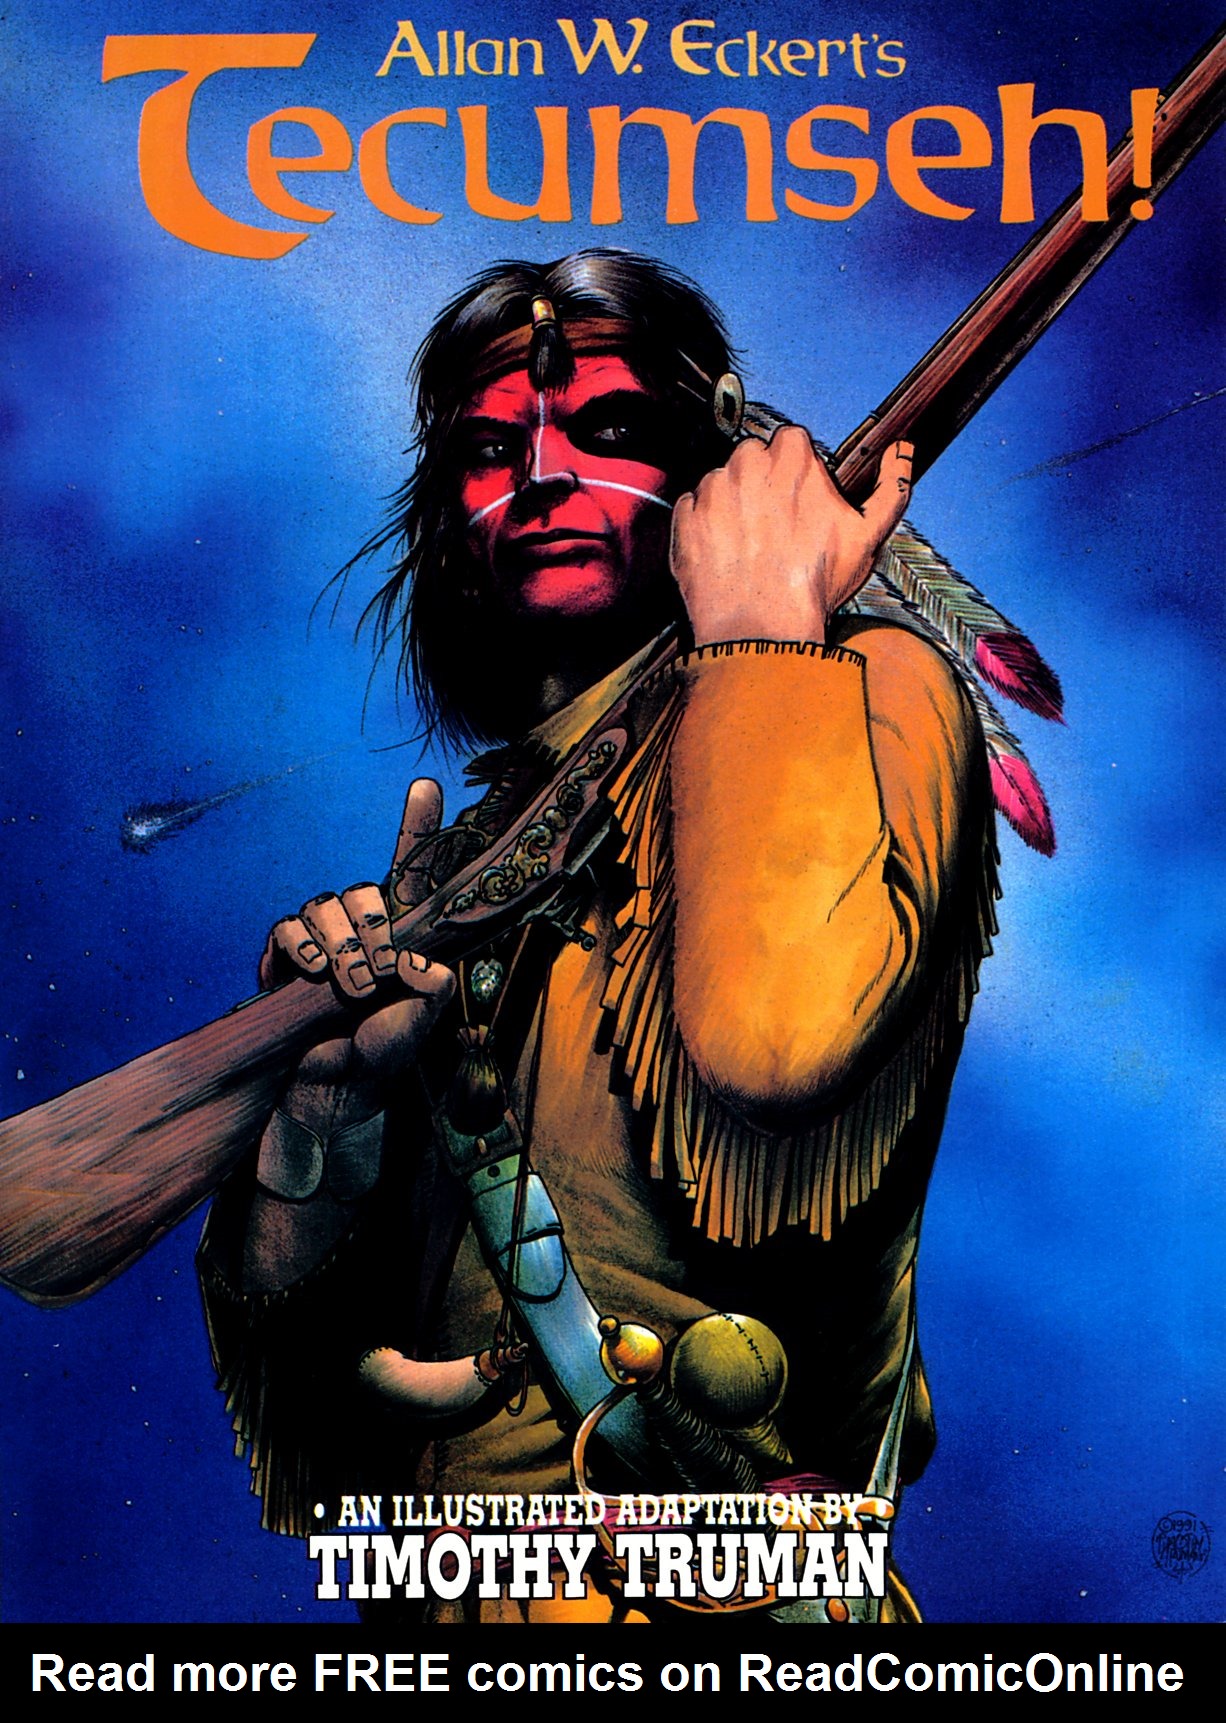 Read online Allen W. Eckert's Tecumseh! comic -  Issue # Full - 1